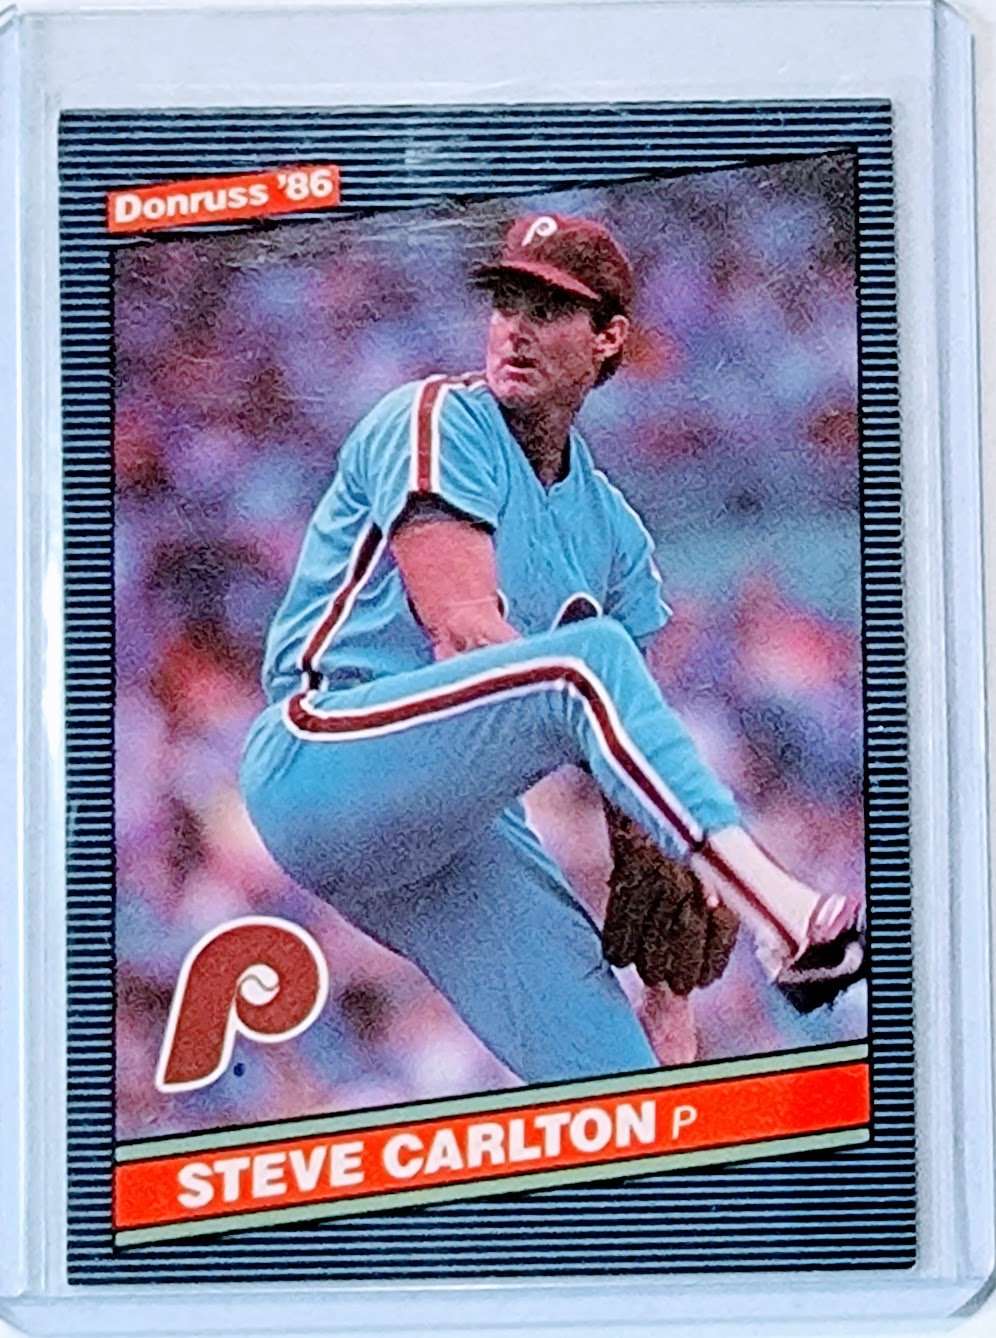 1986 Donruss Steve Carlton Baseball Trading Card TPTV simple Xclusive Collectibles   